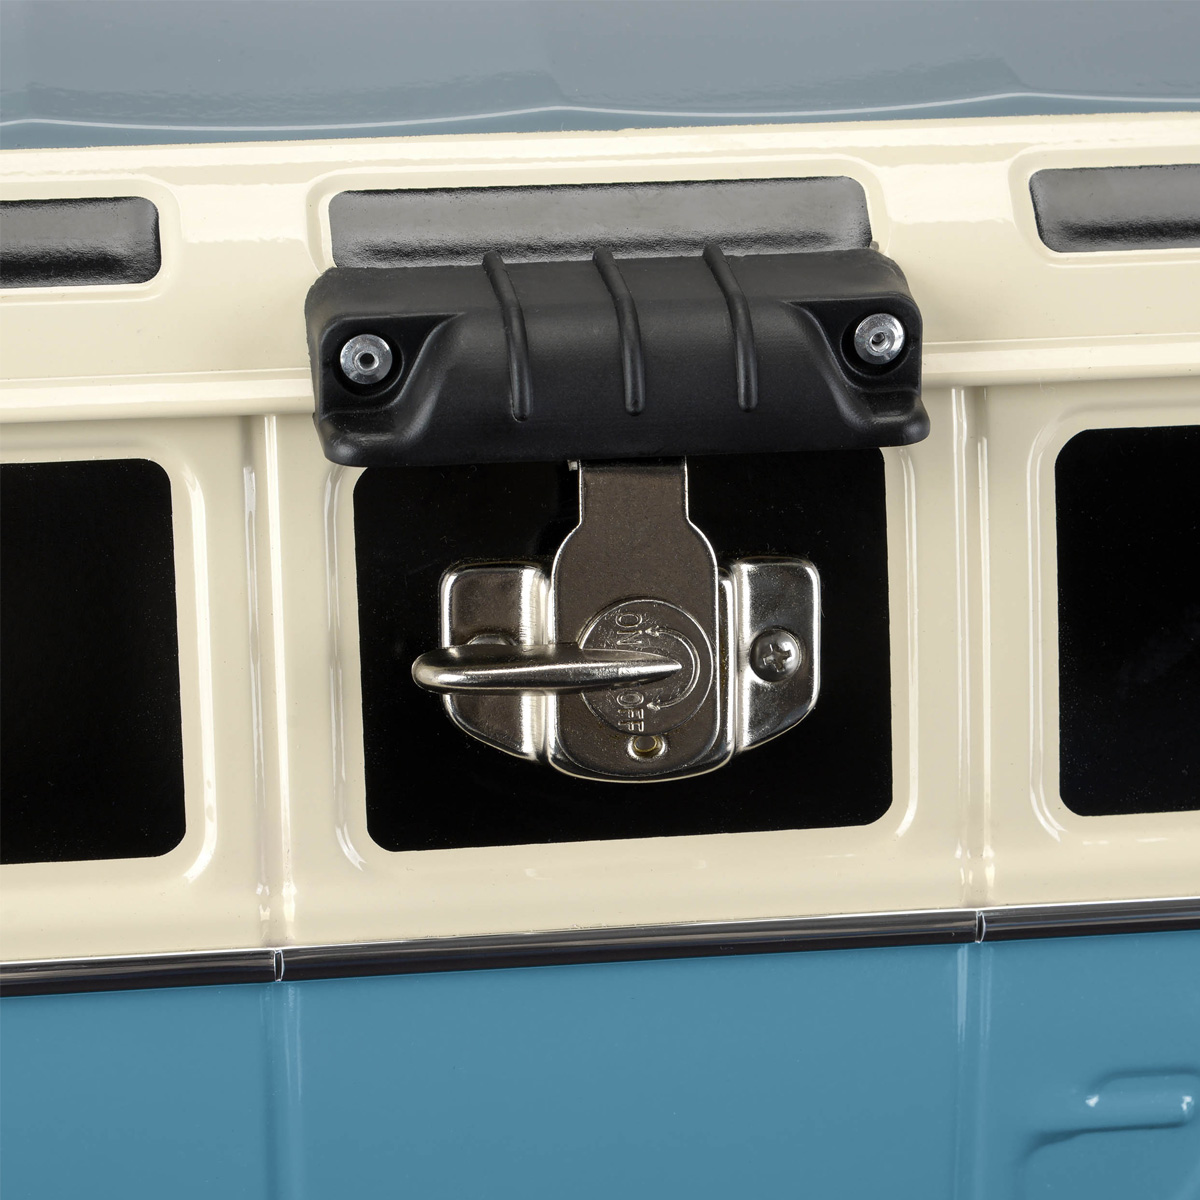 VW Collection - VW T1 Bus - fahrbare Kühlbox - 30 Liter - blau